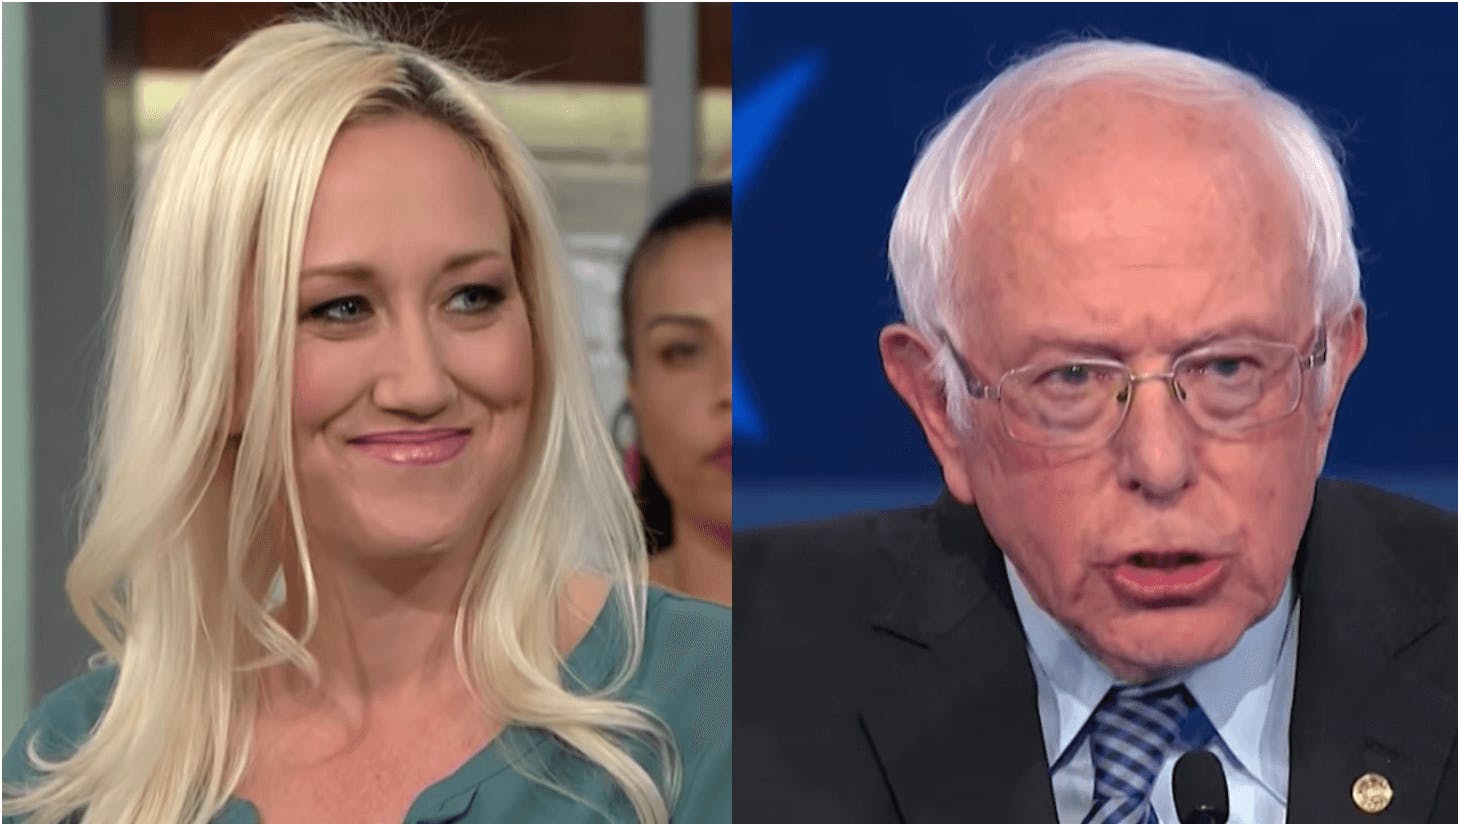 Porn stars are lining up behind Bernie Sanders